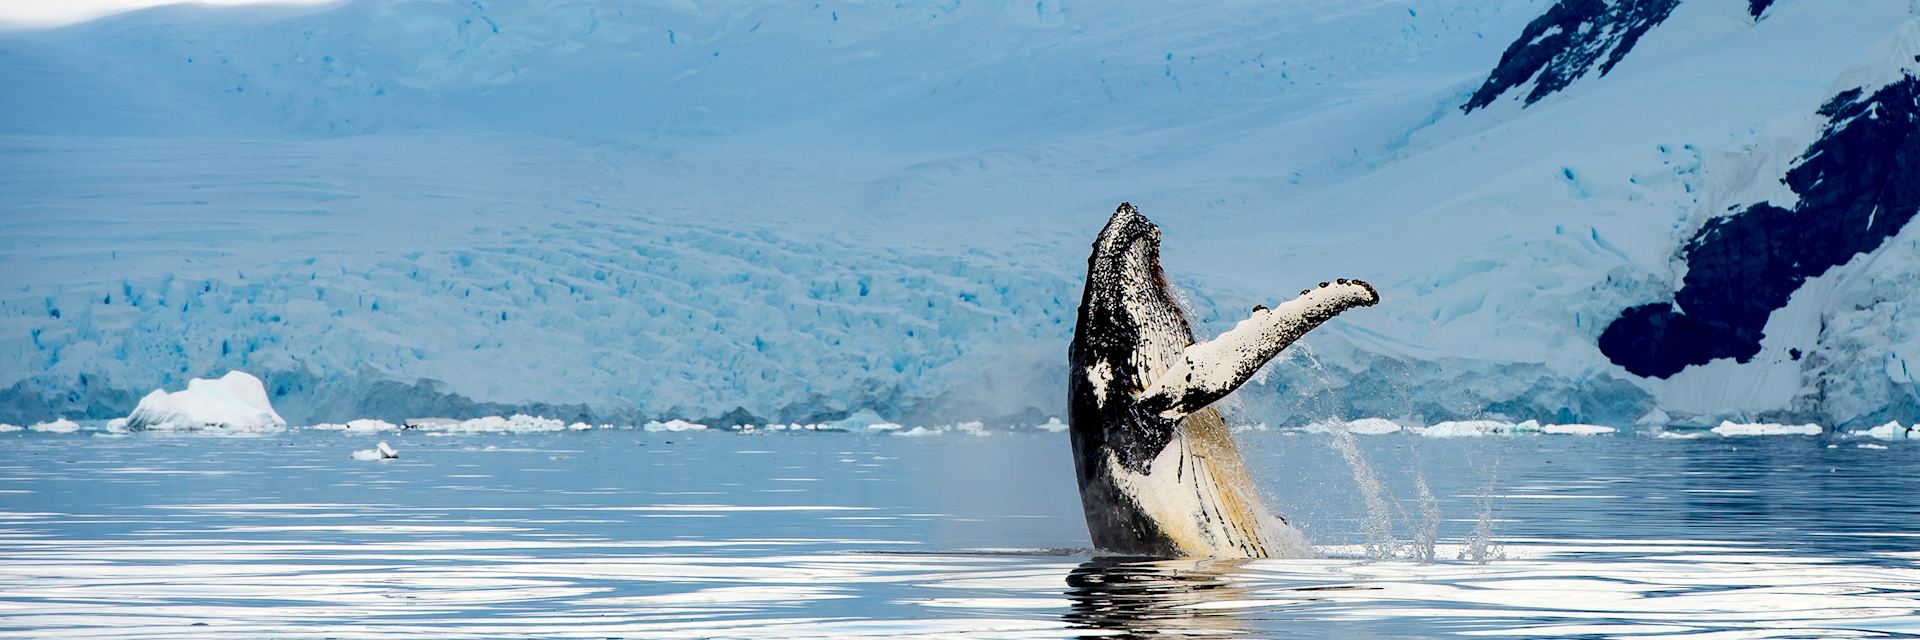 Humpback whale, Alaska